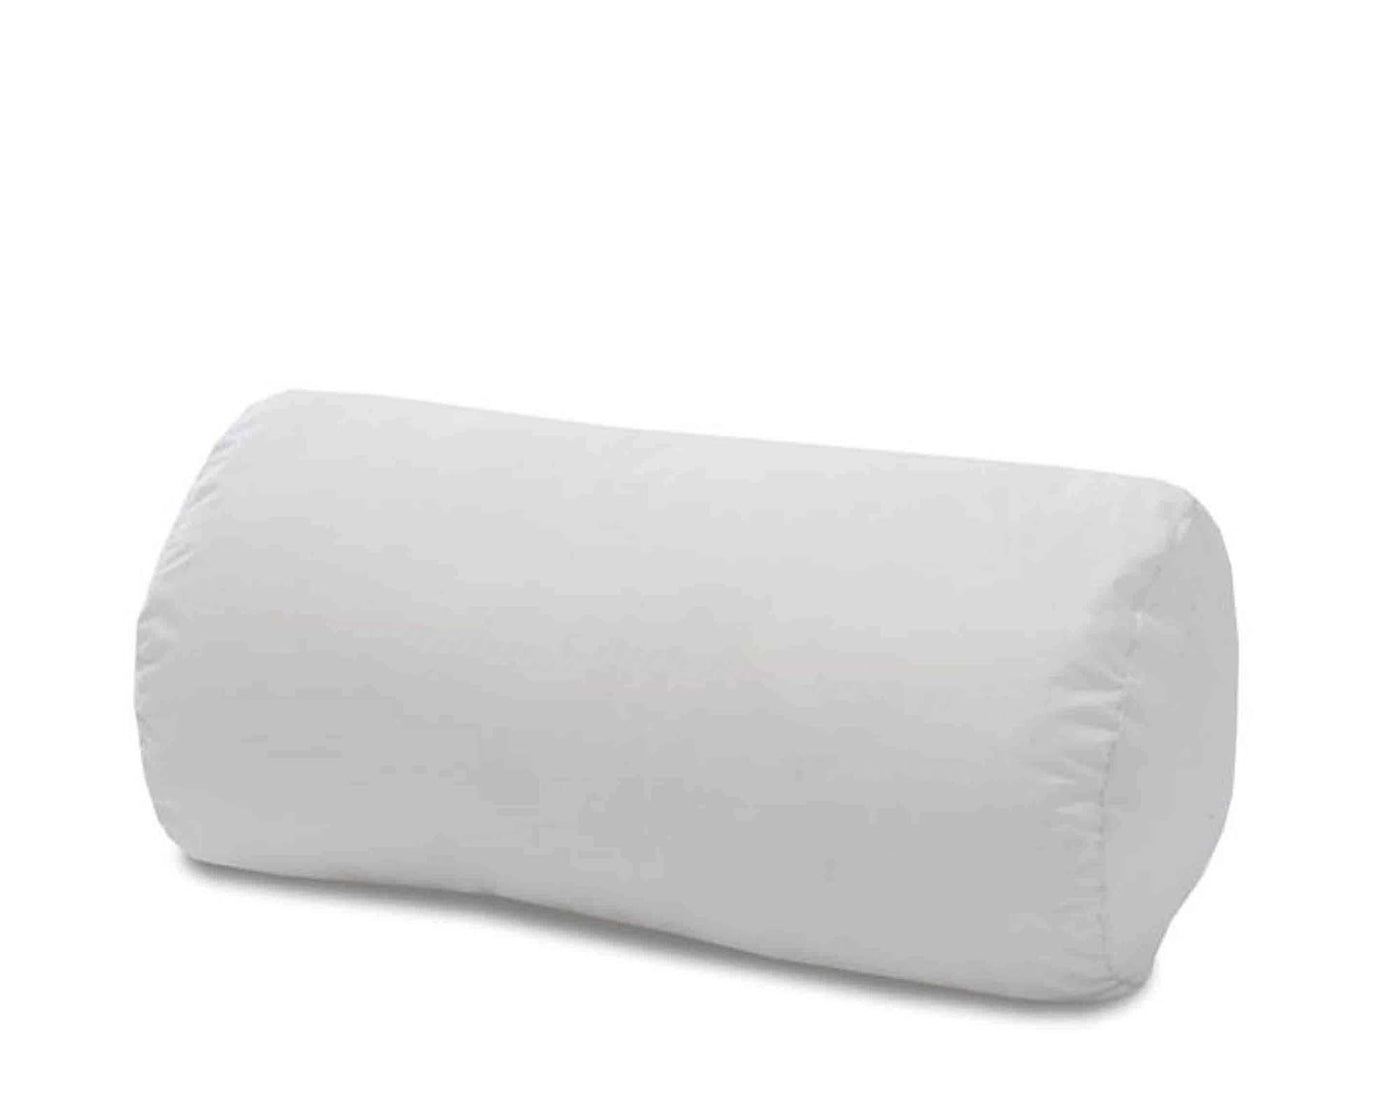 White neck roll pillow